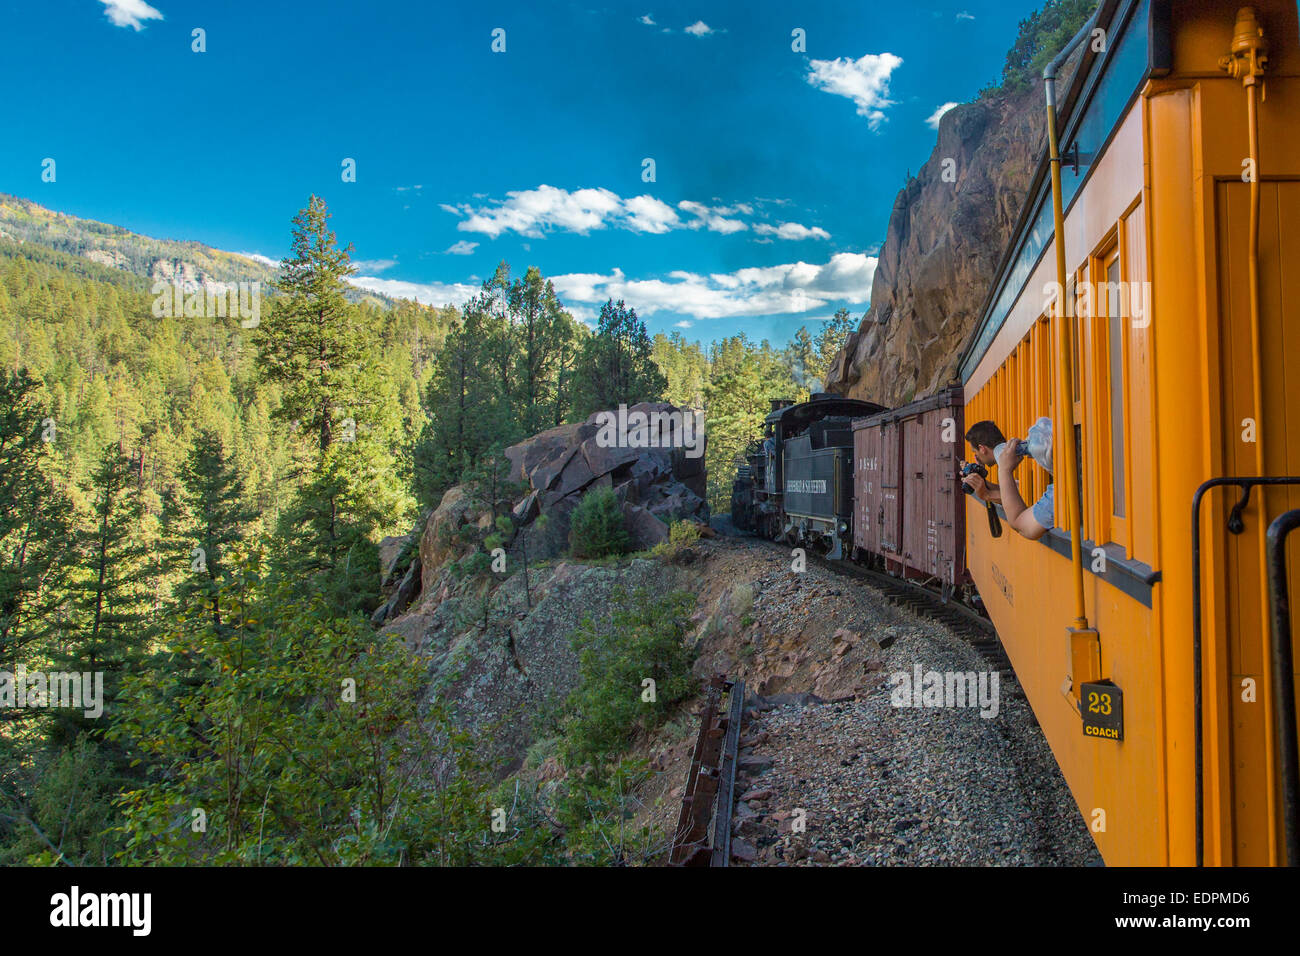 Historic Durango & Silverton Narrow Gauge Railroad train on route between Durango and Silver Colorado Stock Photo